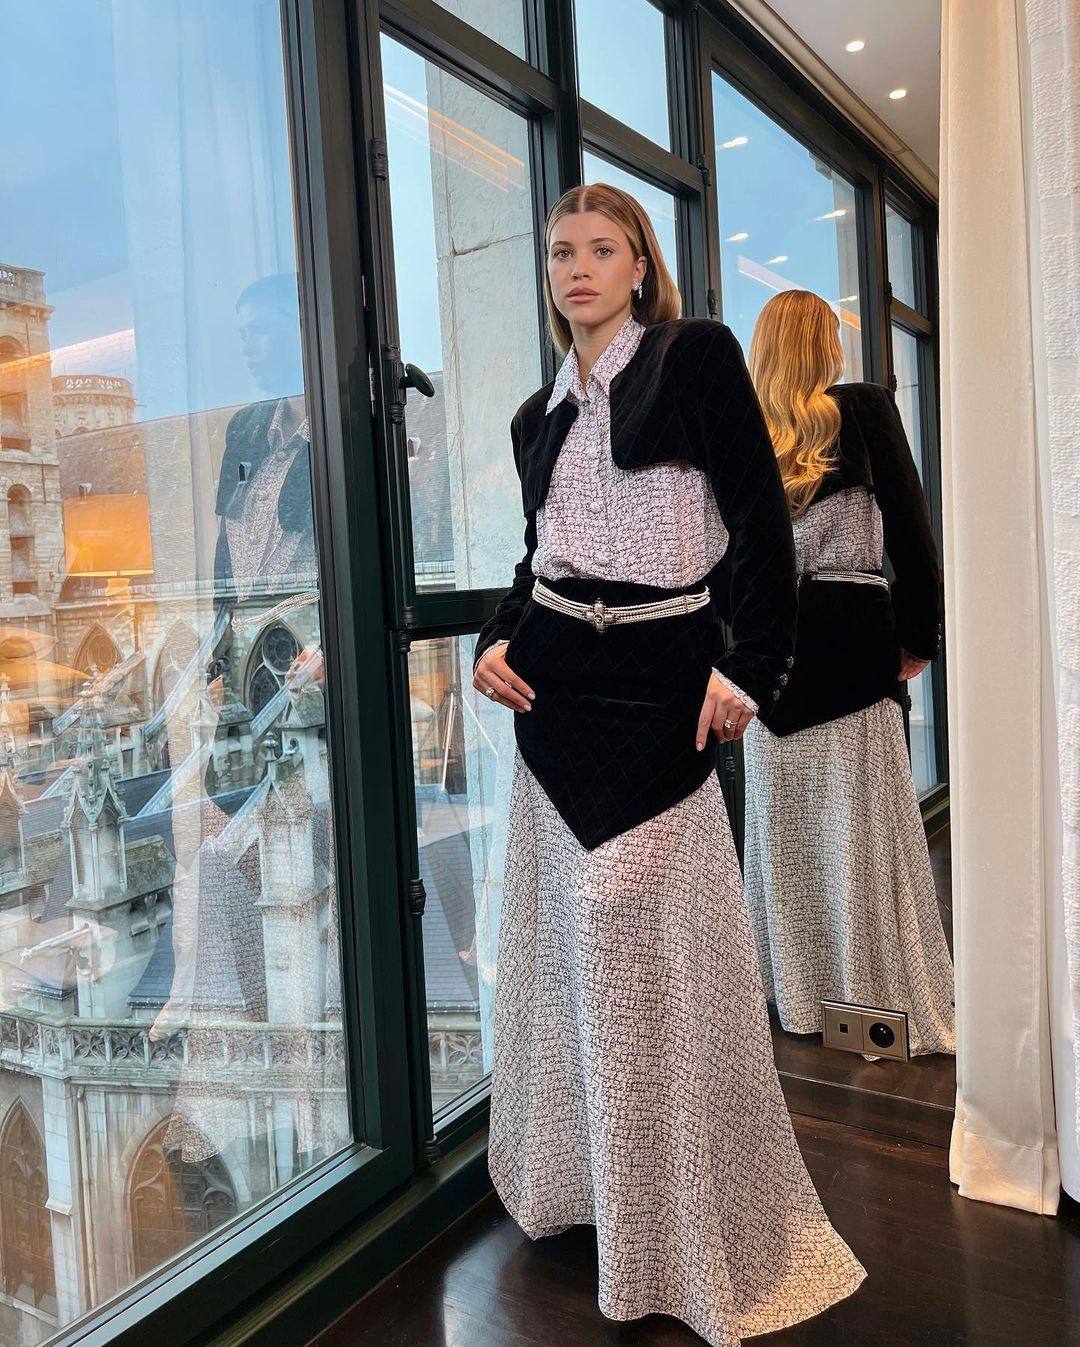 Sofia Richie is a fashionista in her own right. Photo: @sofiarichiegrainge/Instagram